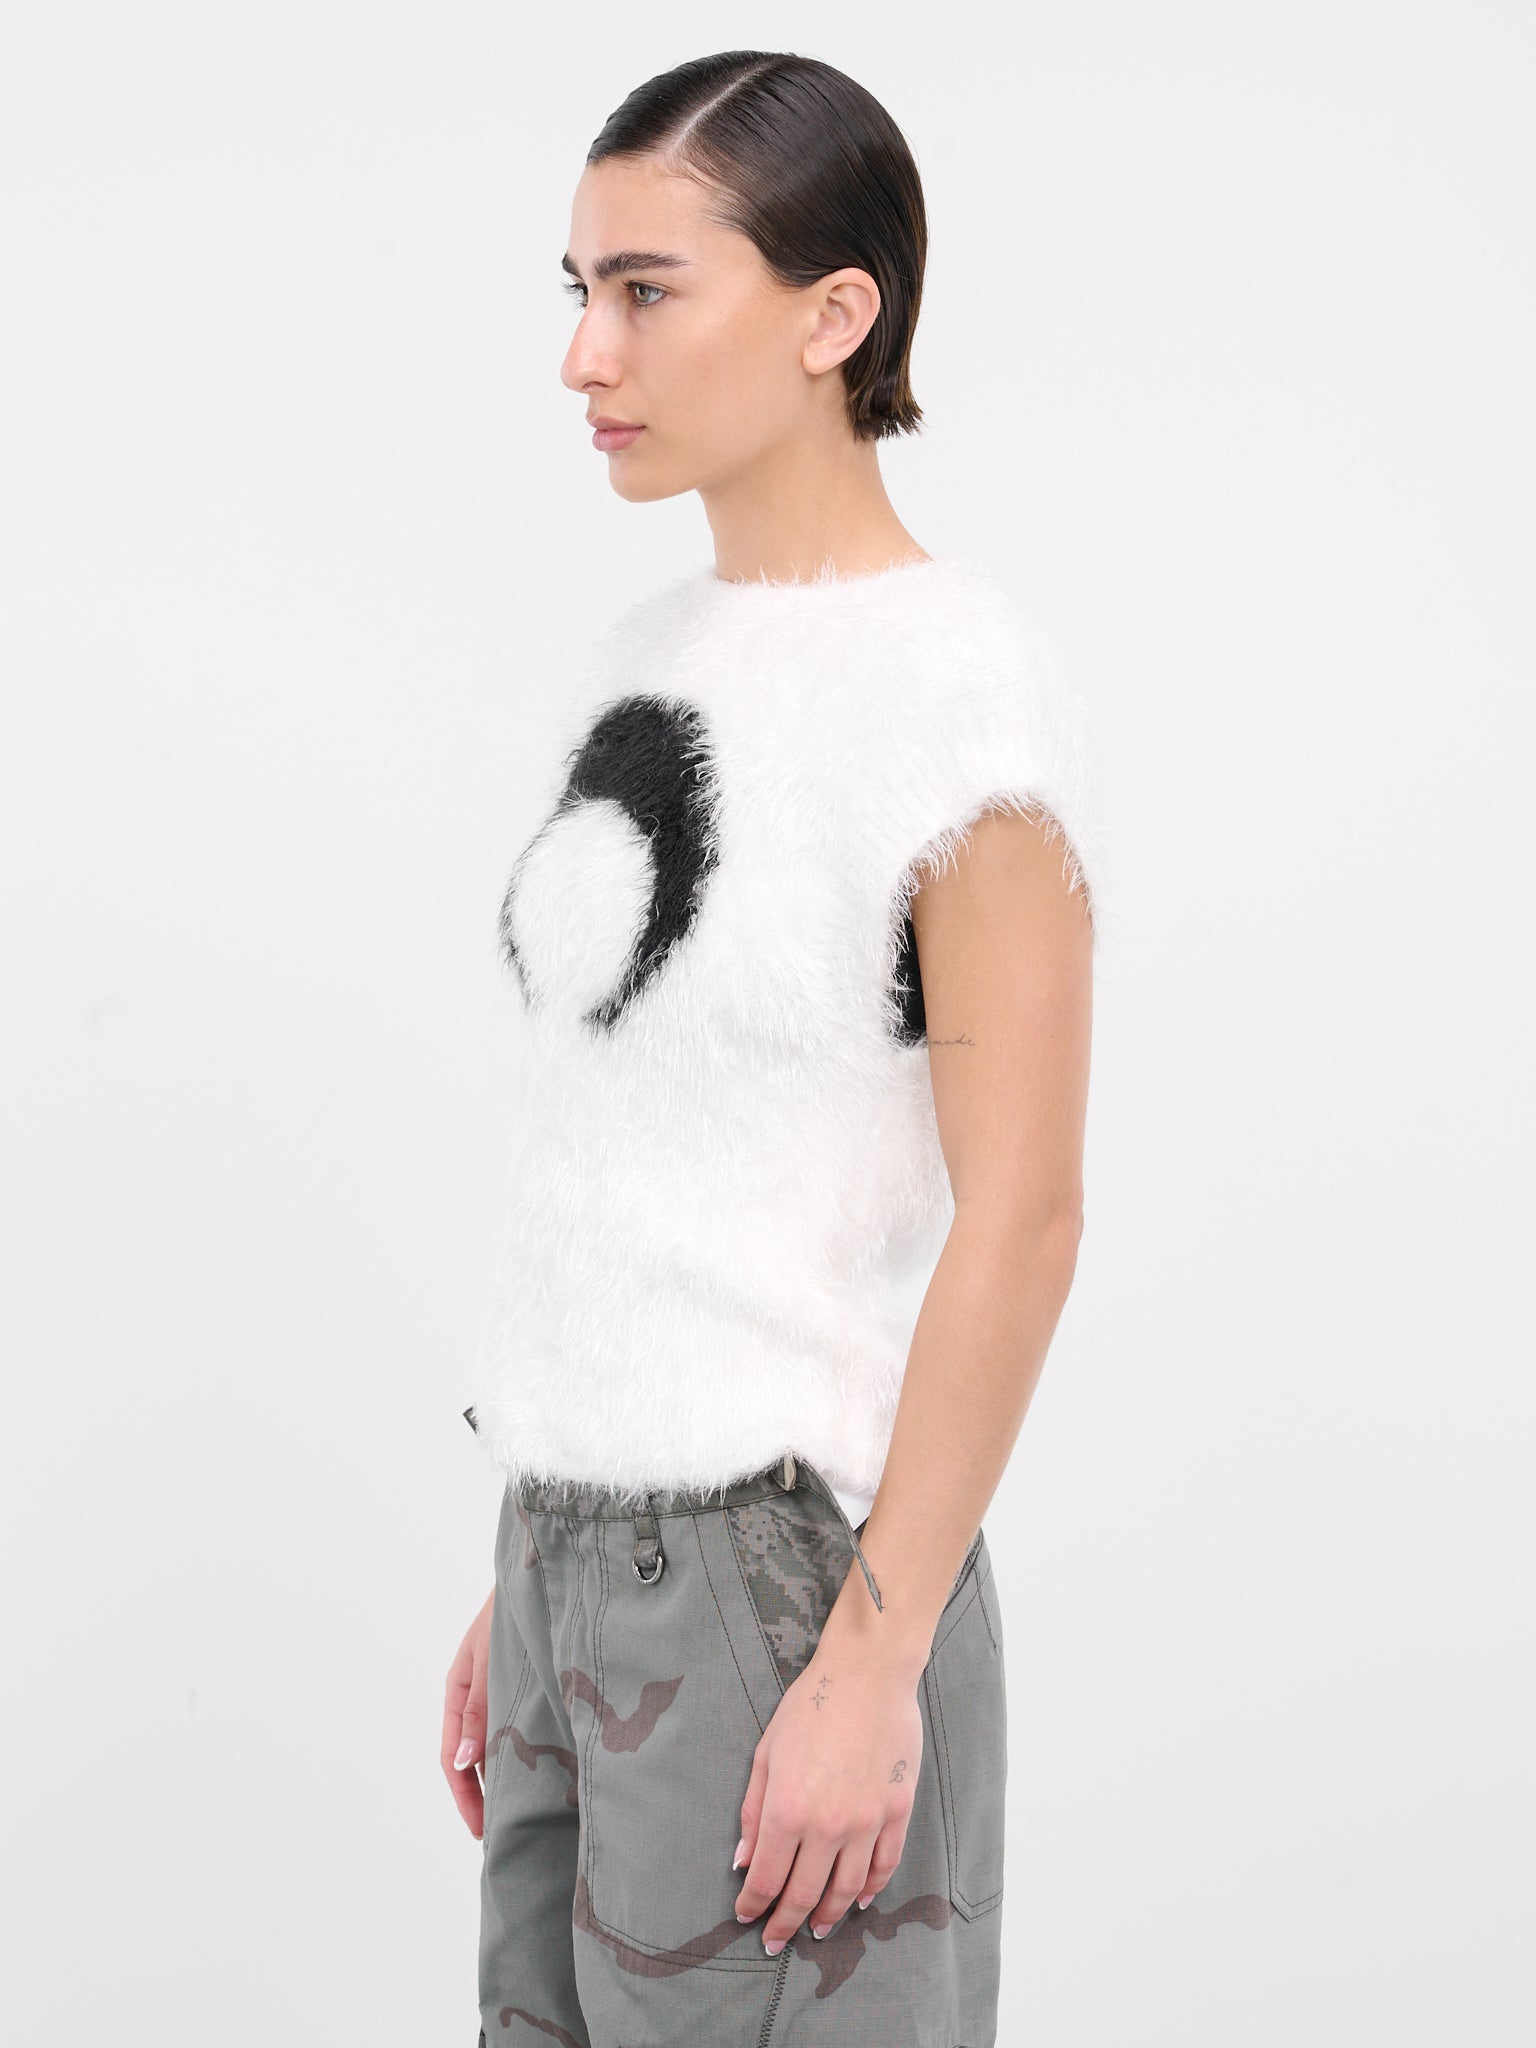 Wild Puffy Knit Sweater (UTK001-CKNI0031-OFF-WHITE)